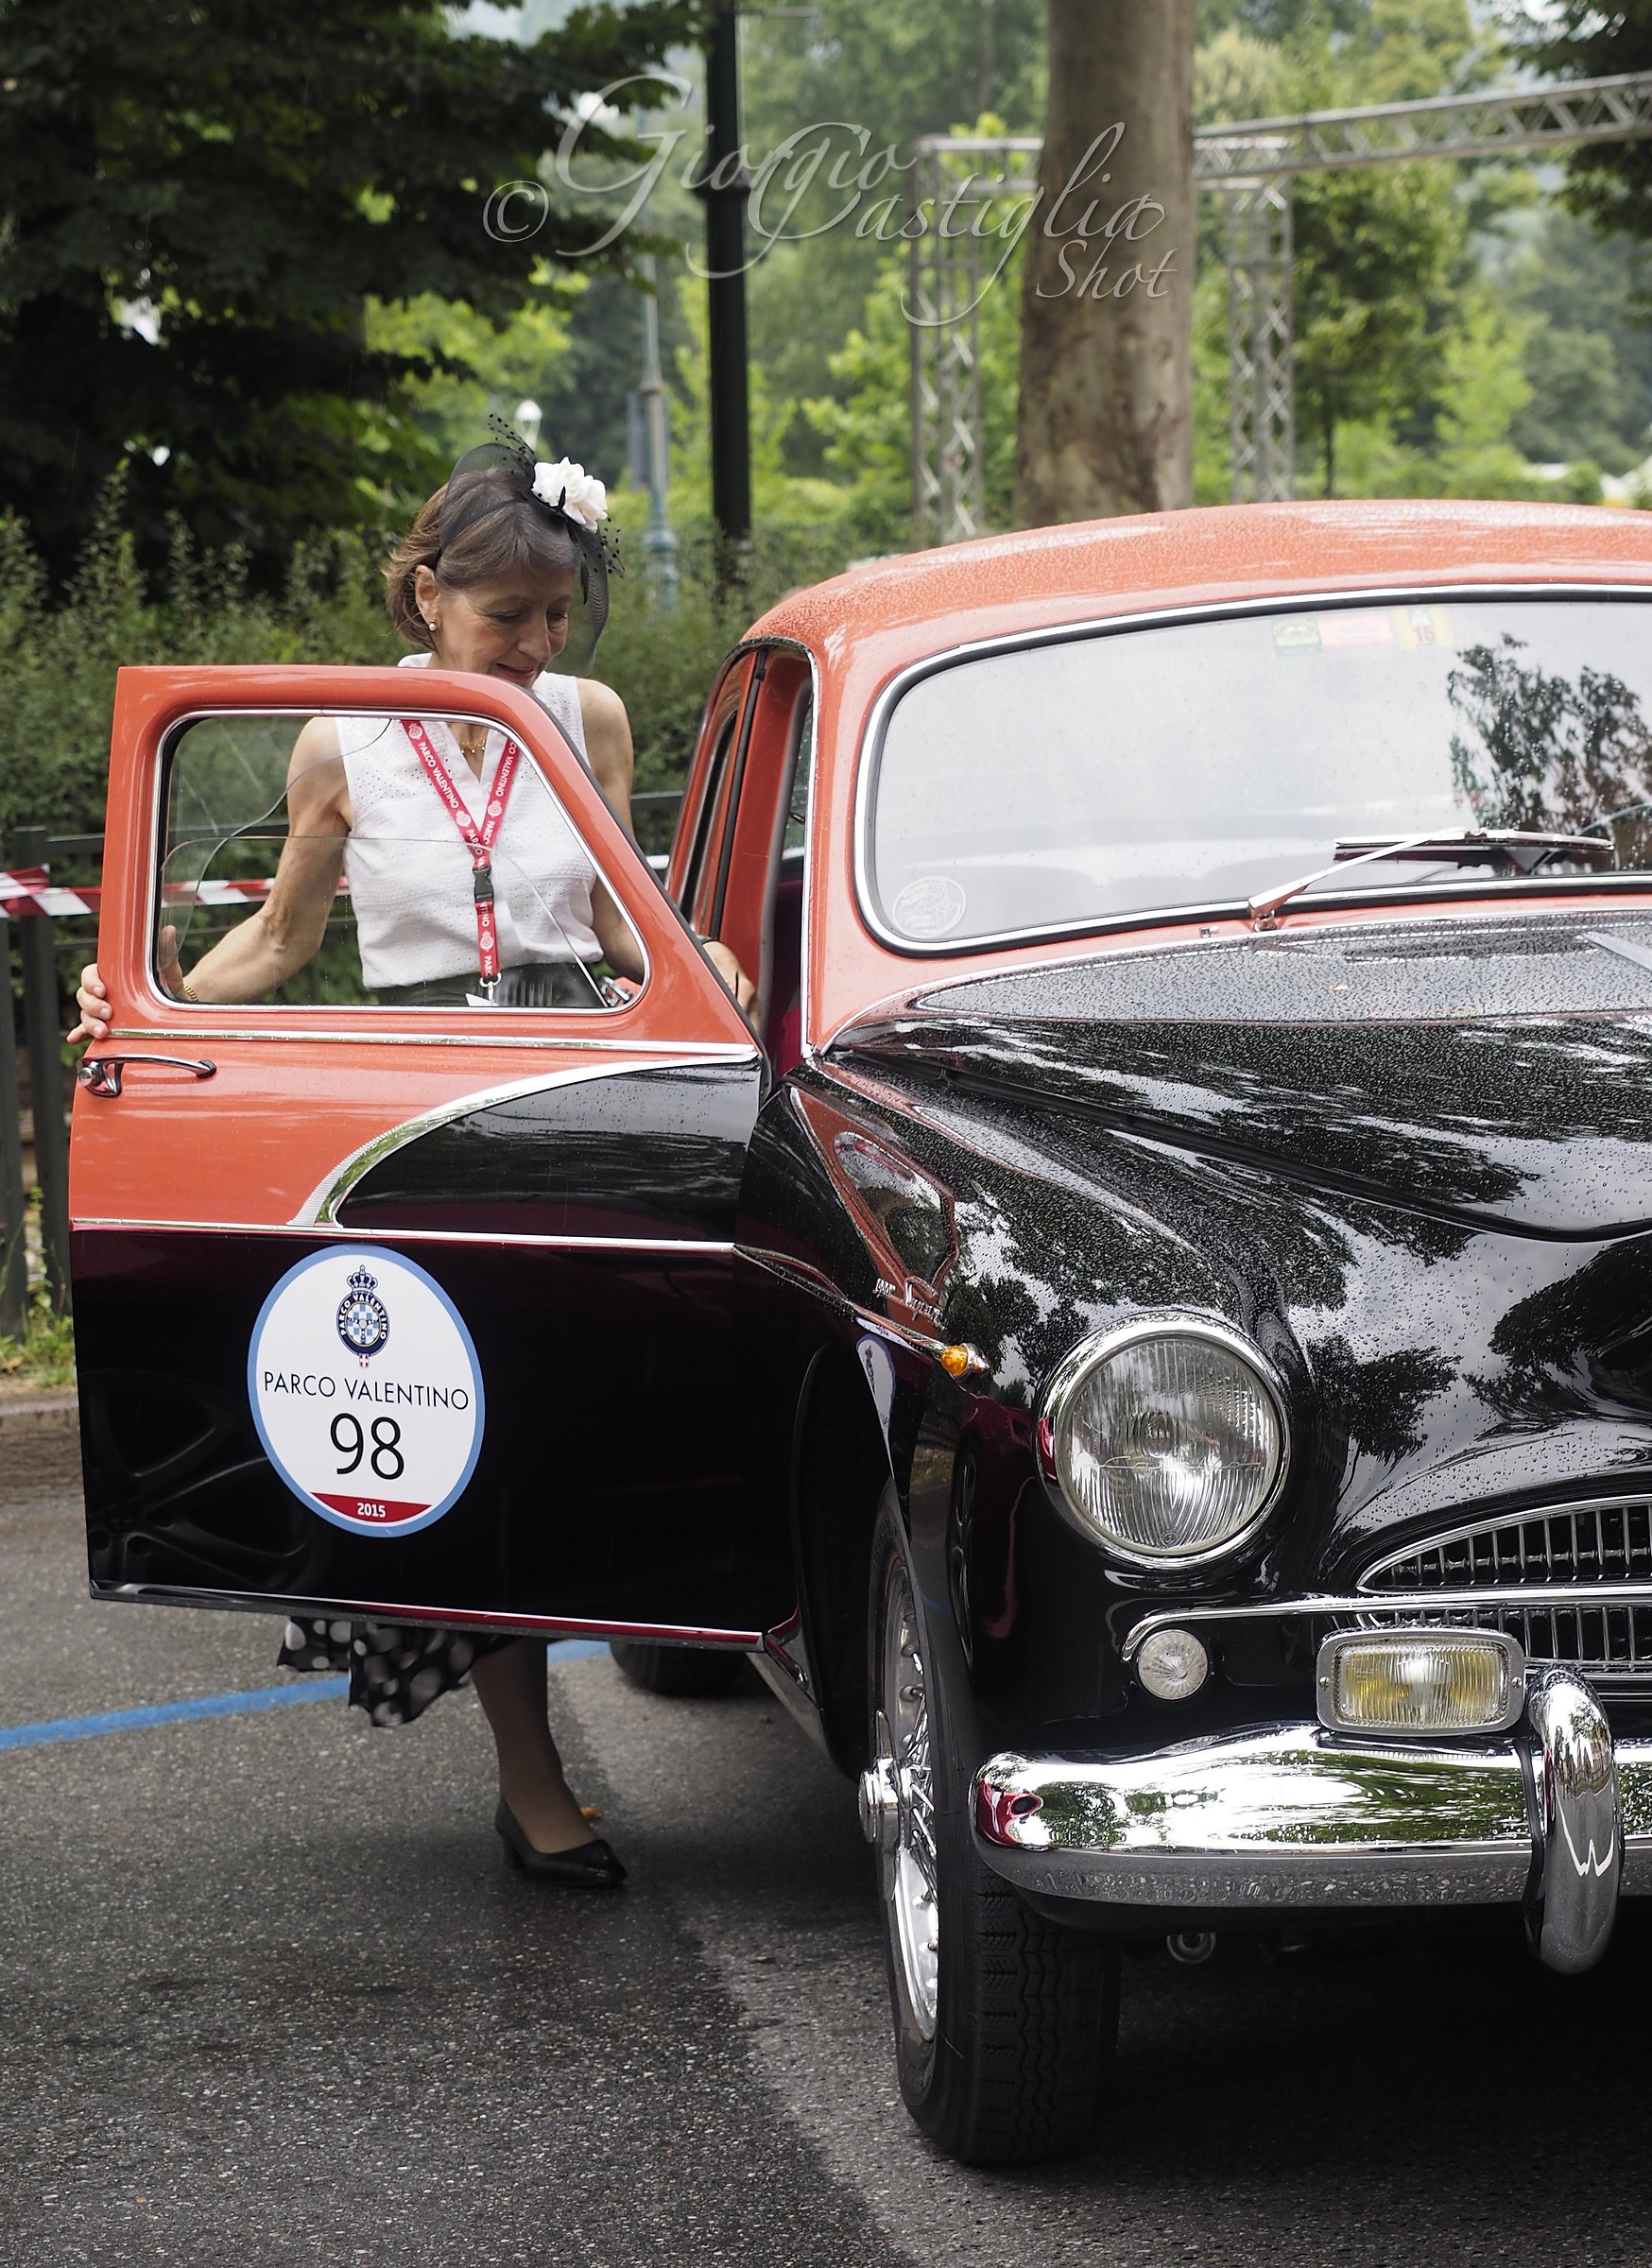 Turin Motor Show 2015 (parade vintage cars)...